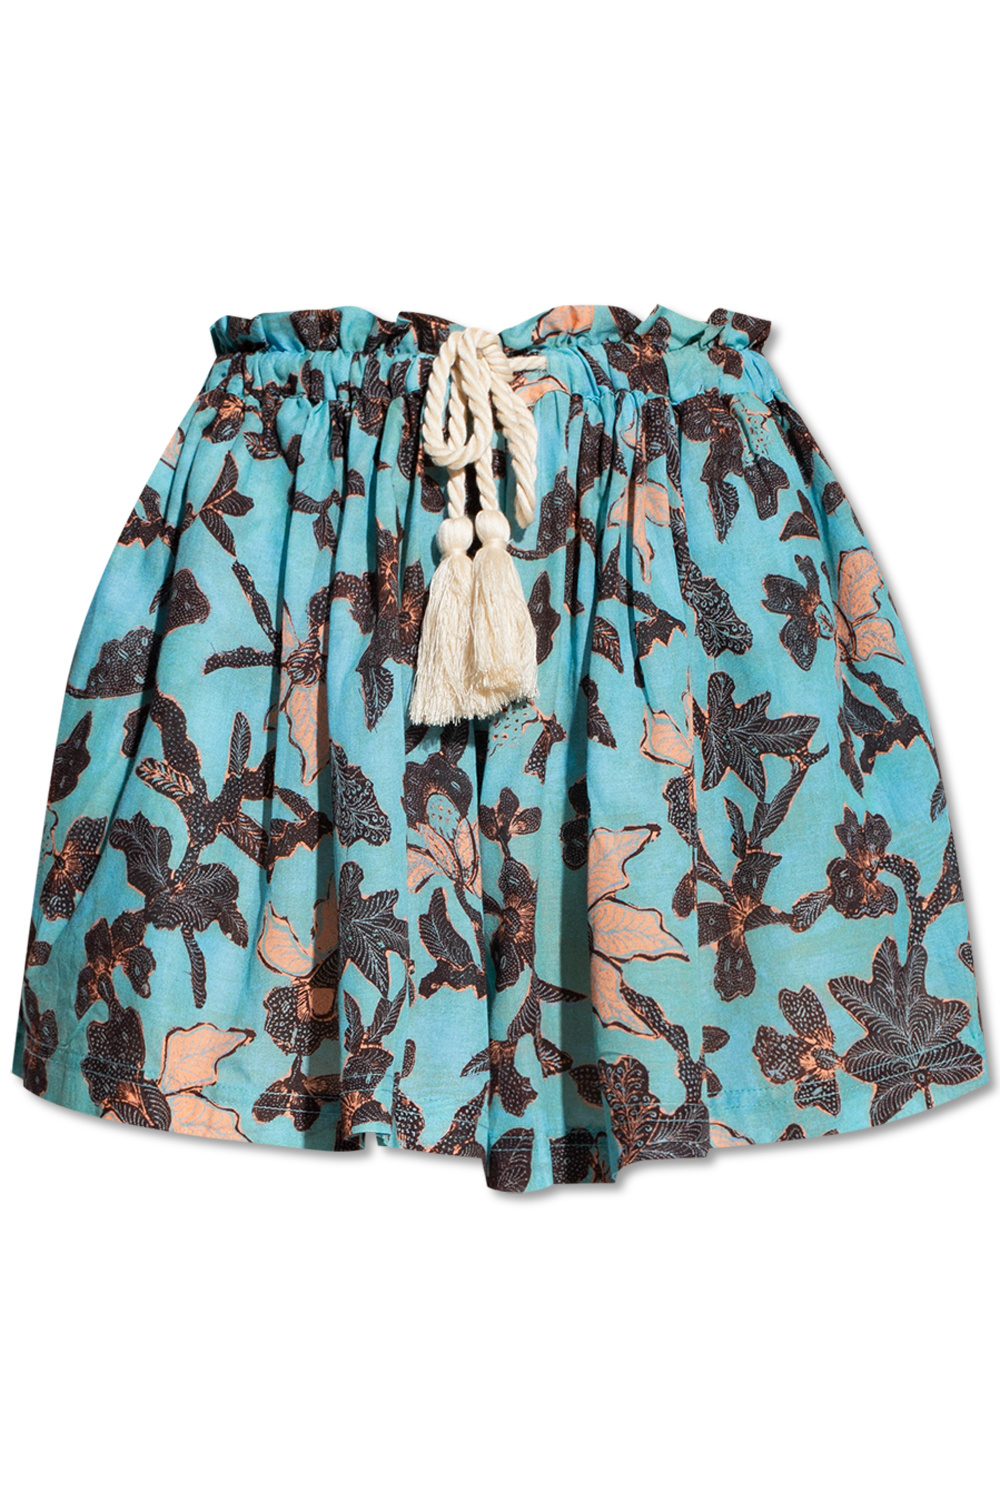 Ulla Johnson Floral shorts